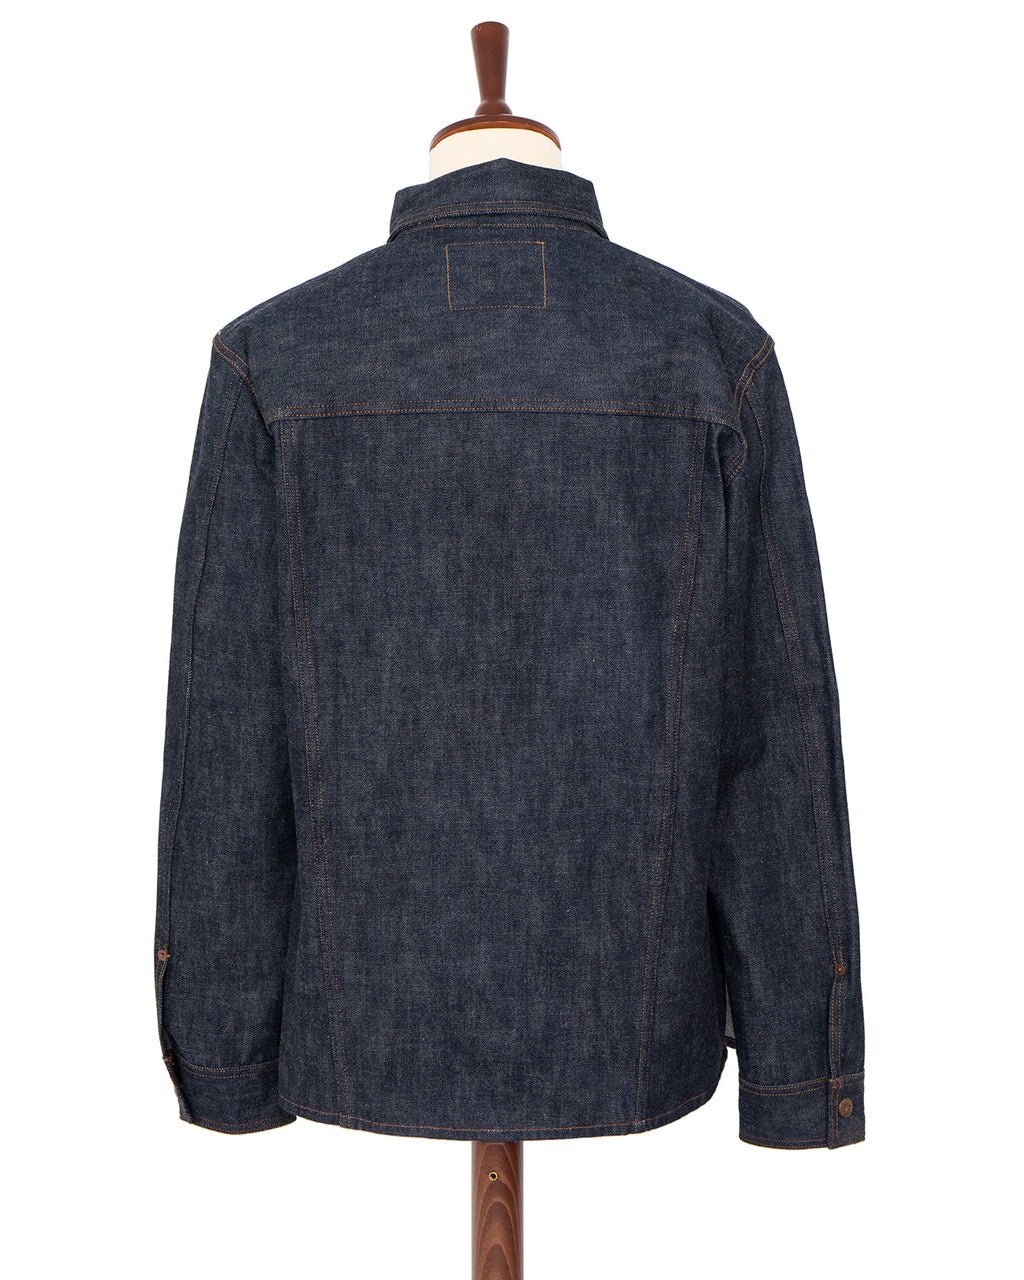 Indigofera Fargo Jacket, Fabric No. 3 S.T.P.F